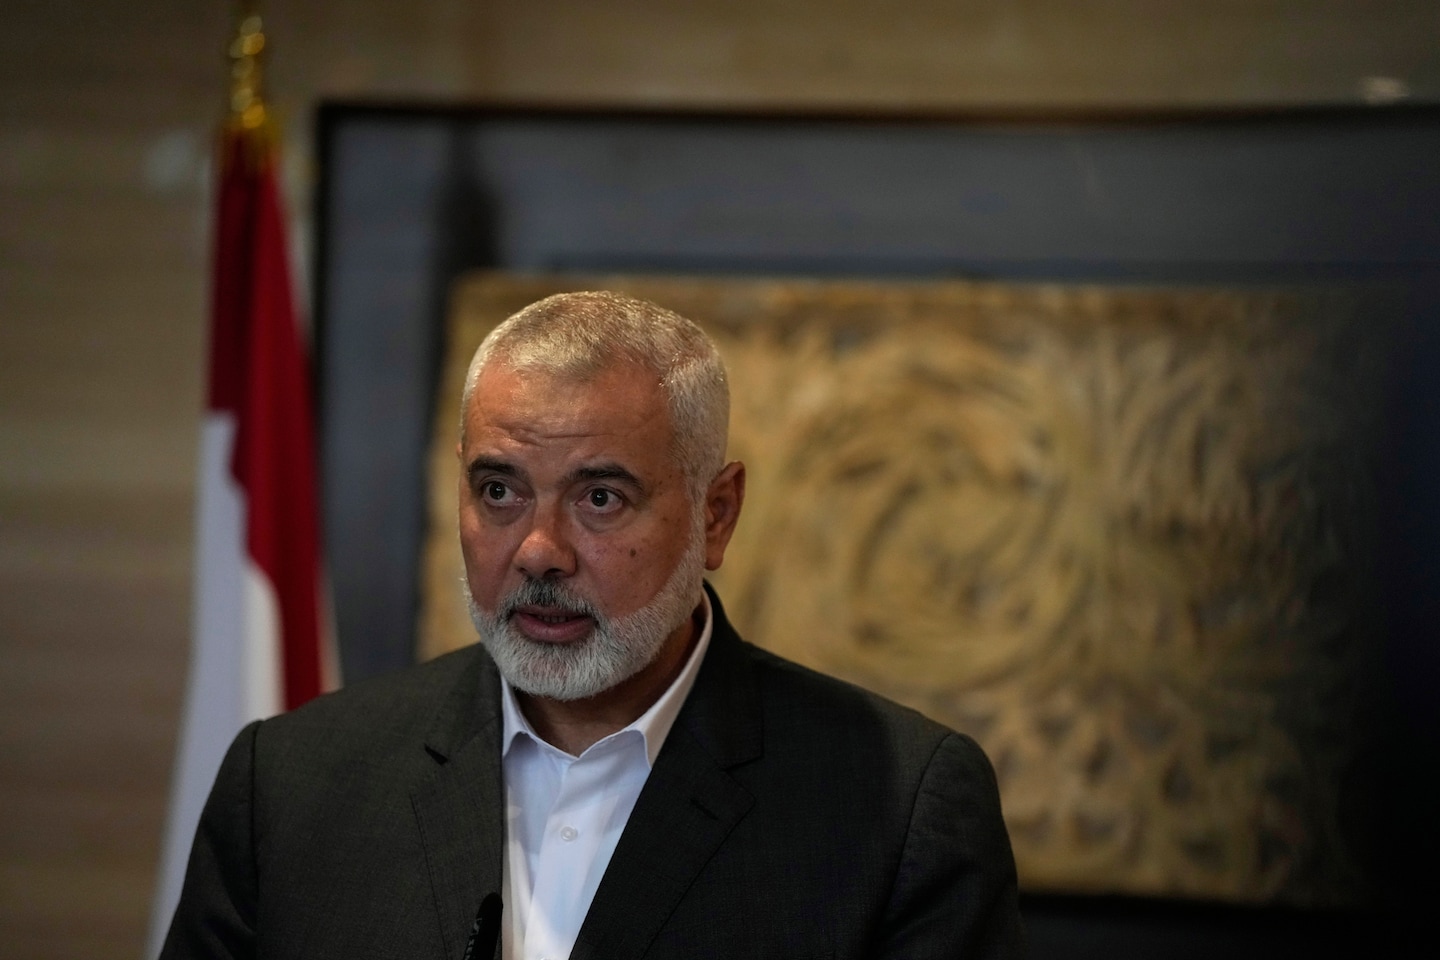 Israel-Gaza war live updates: Hamas leader in Egypt for talks on war; U.N. Security Council to reconvene